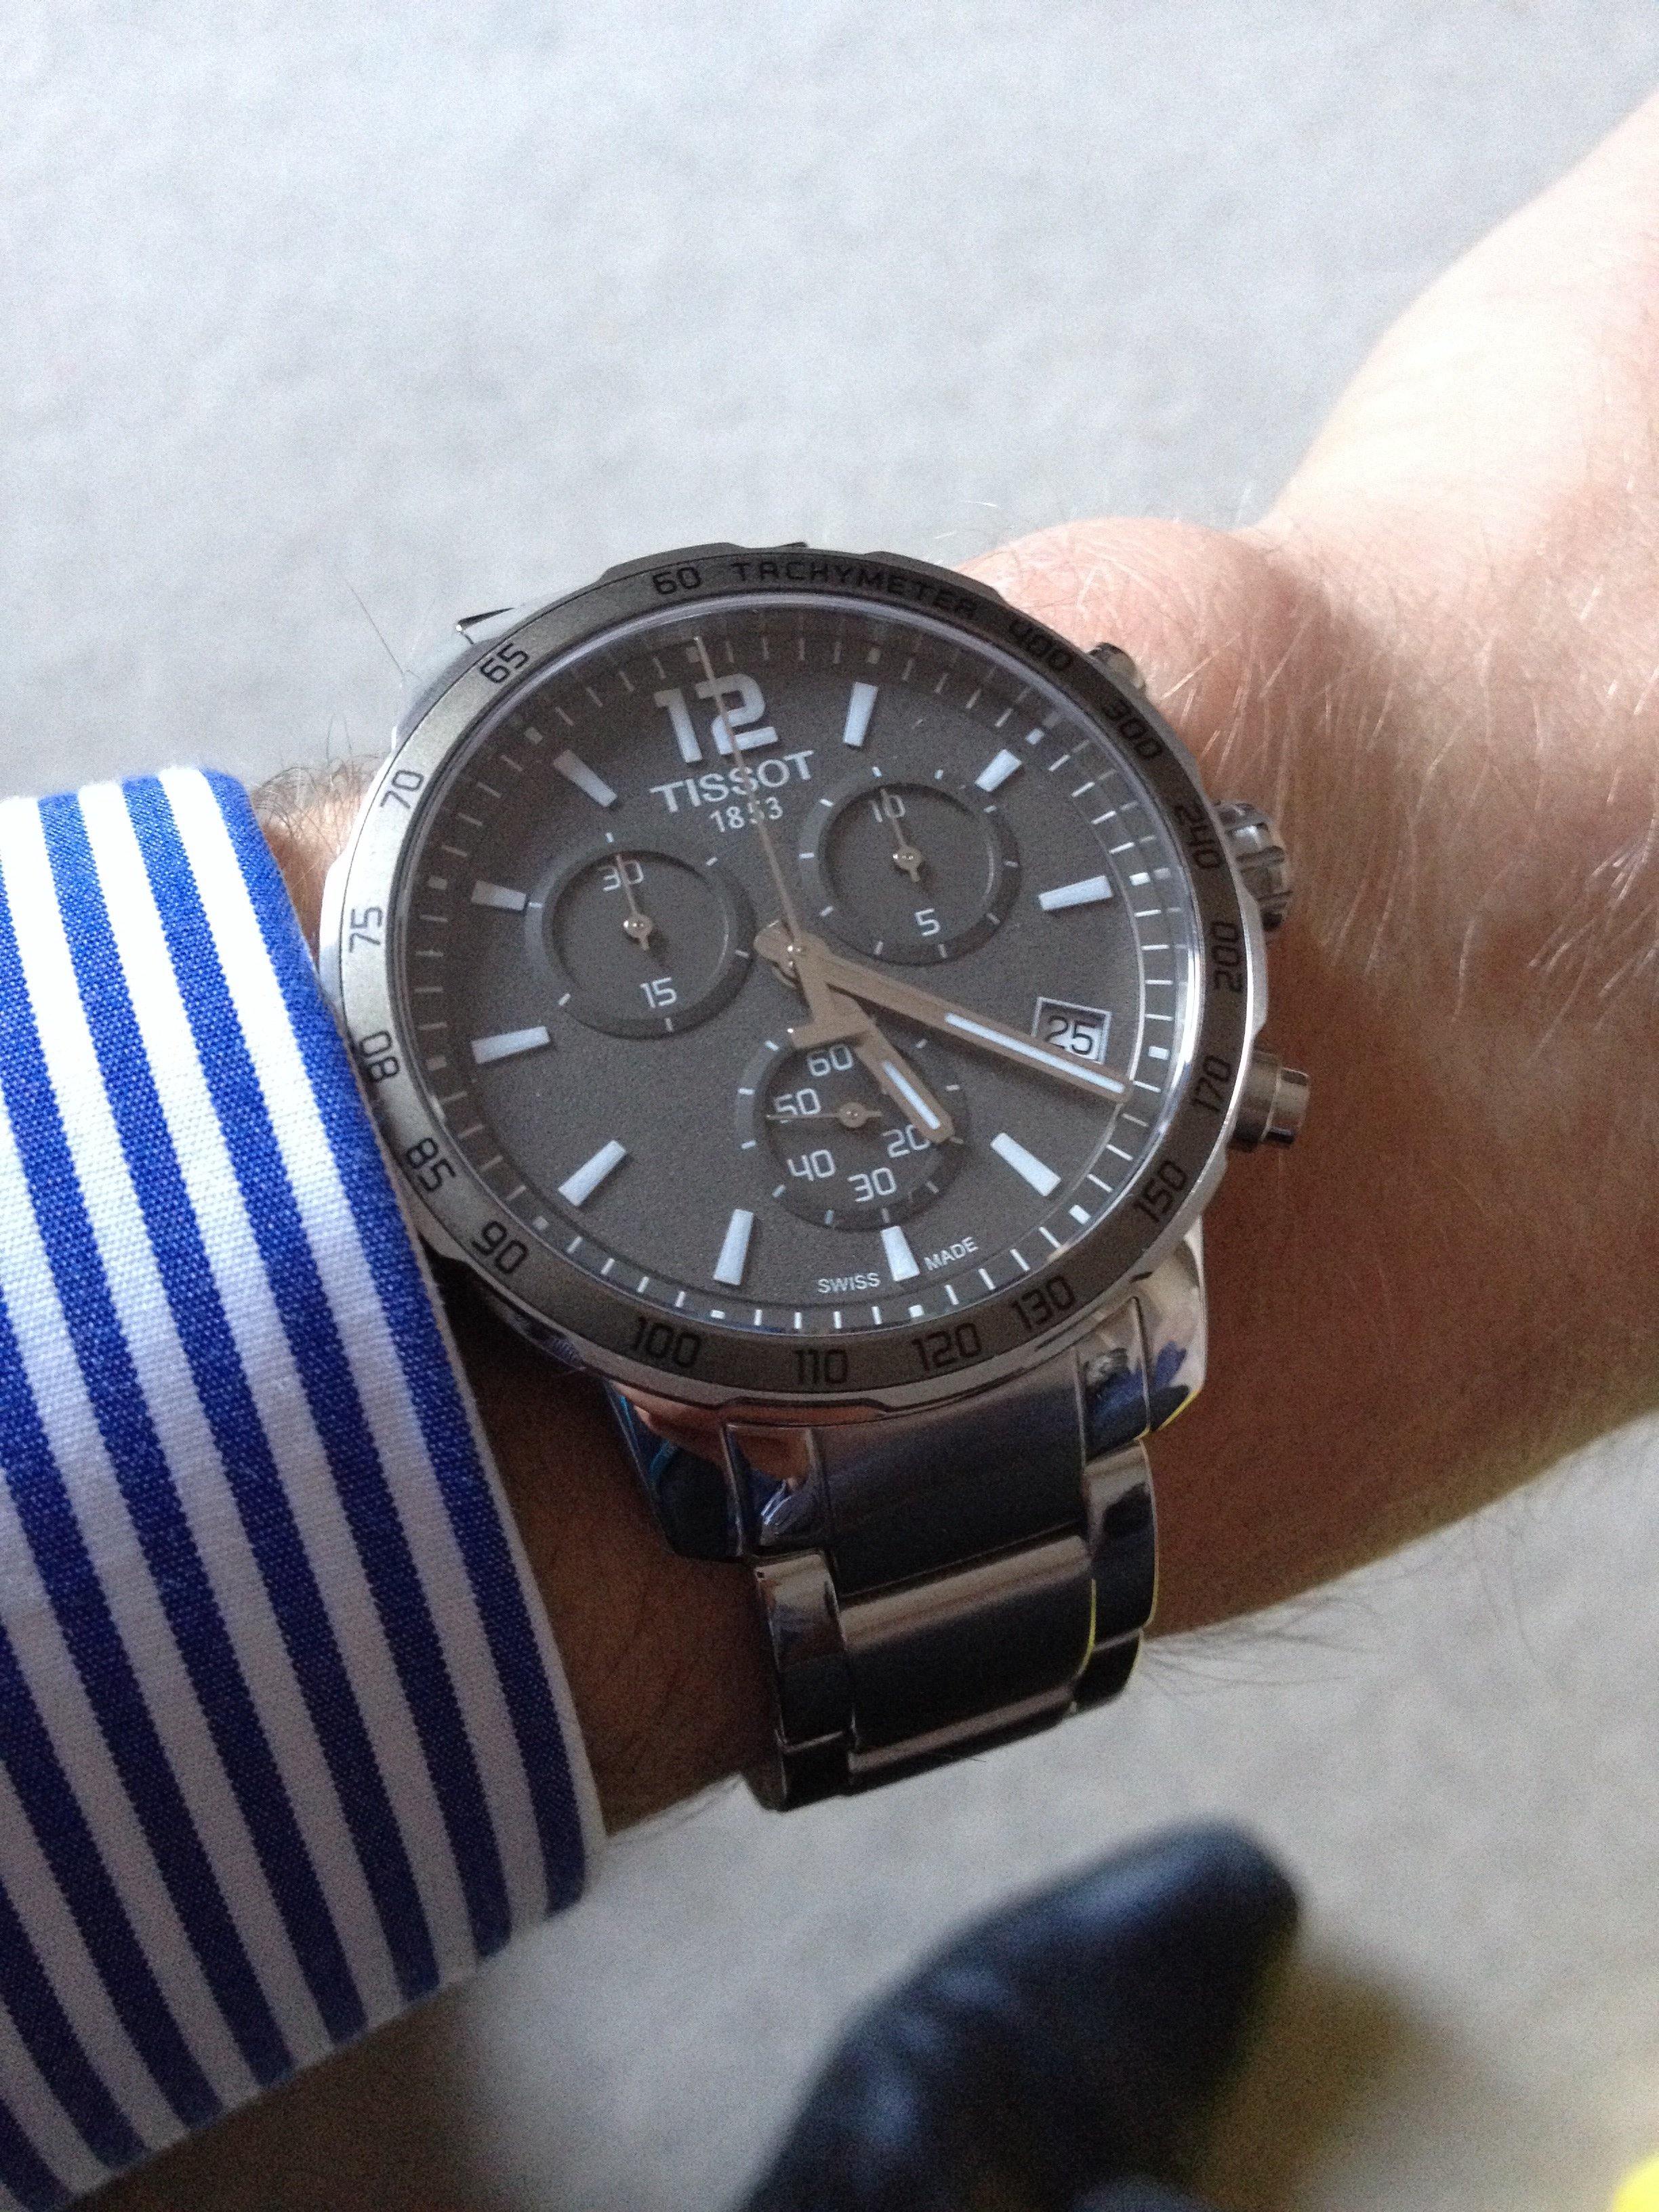 Tissot Swiss Made T-Sport Quickster Chronograph Men's Stainless Steel Watch T0954171106700 - Prestige